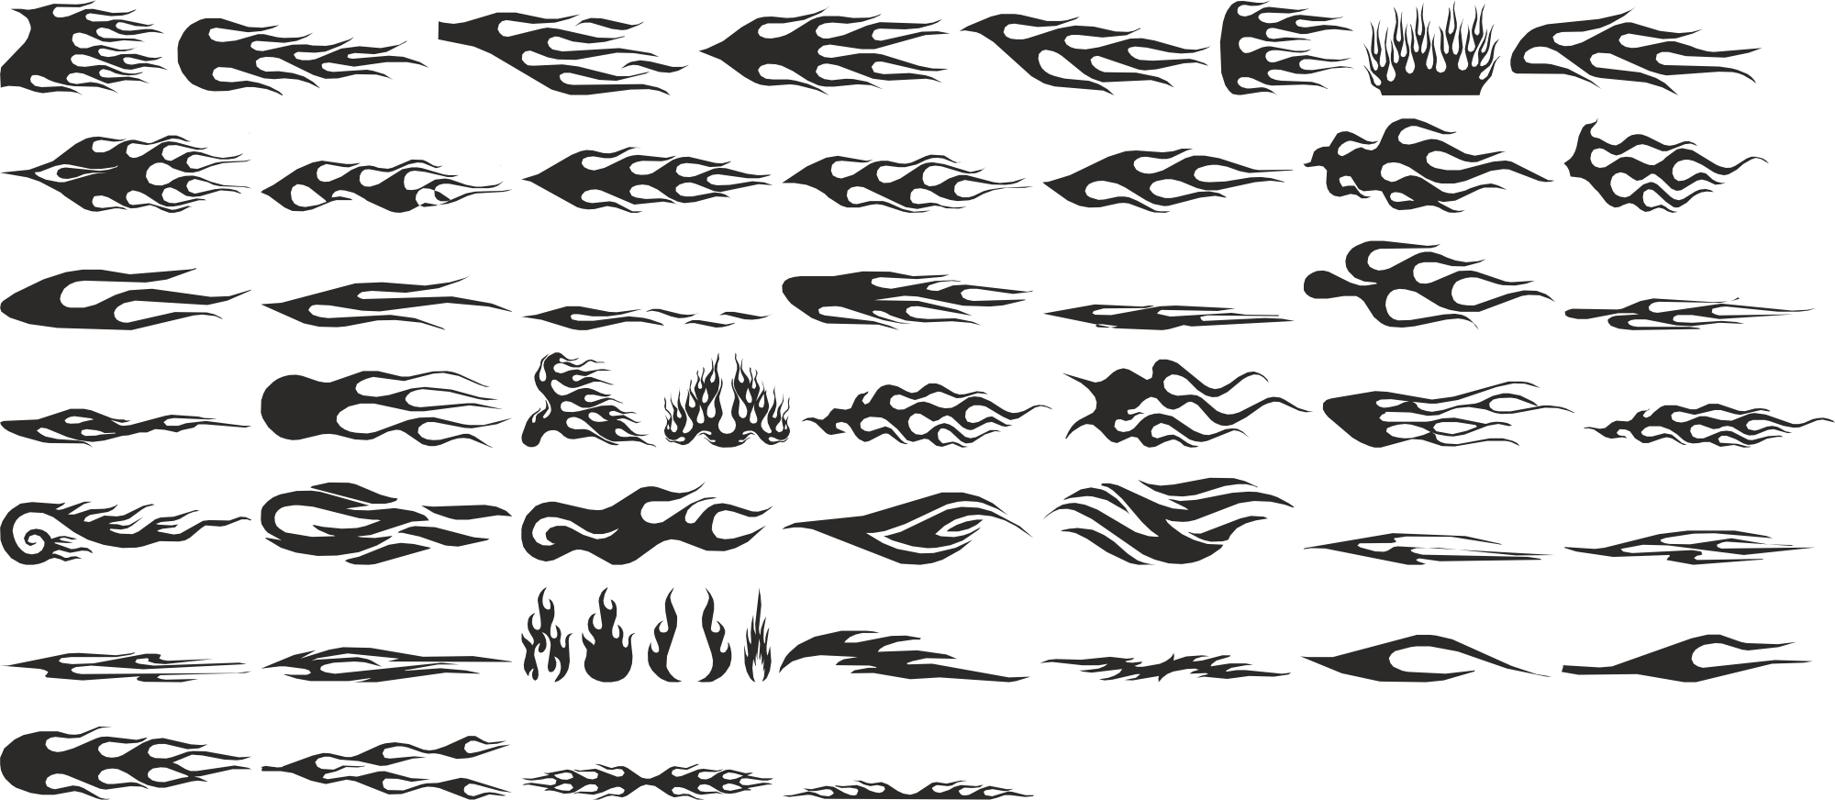 Tribal black fire flames tattoo design vectors Free Vector cdr Download - 3axis.co